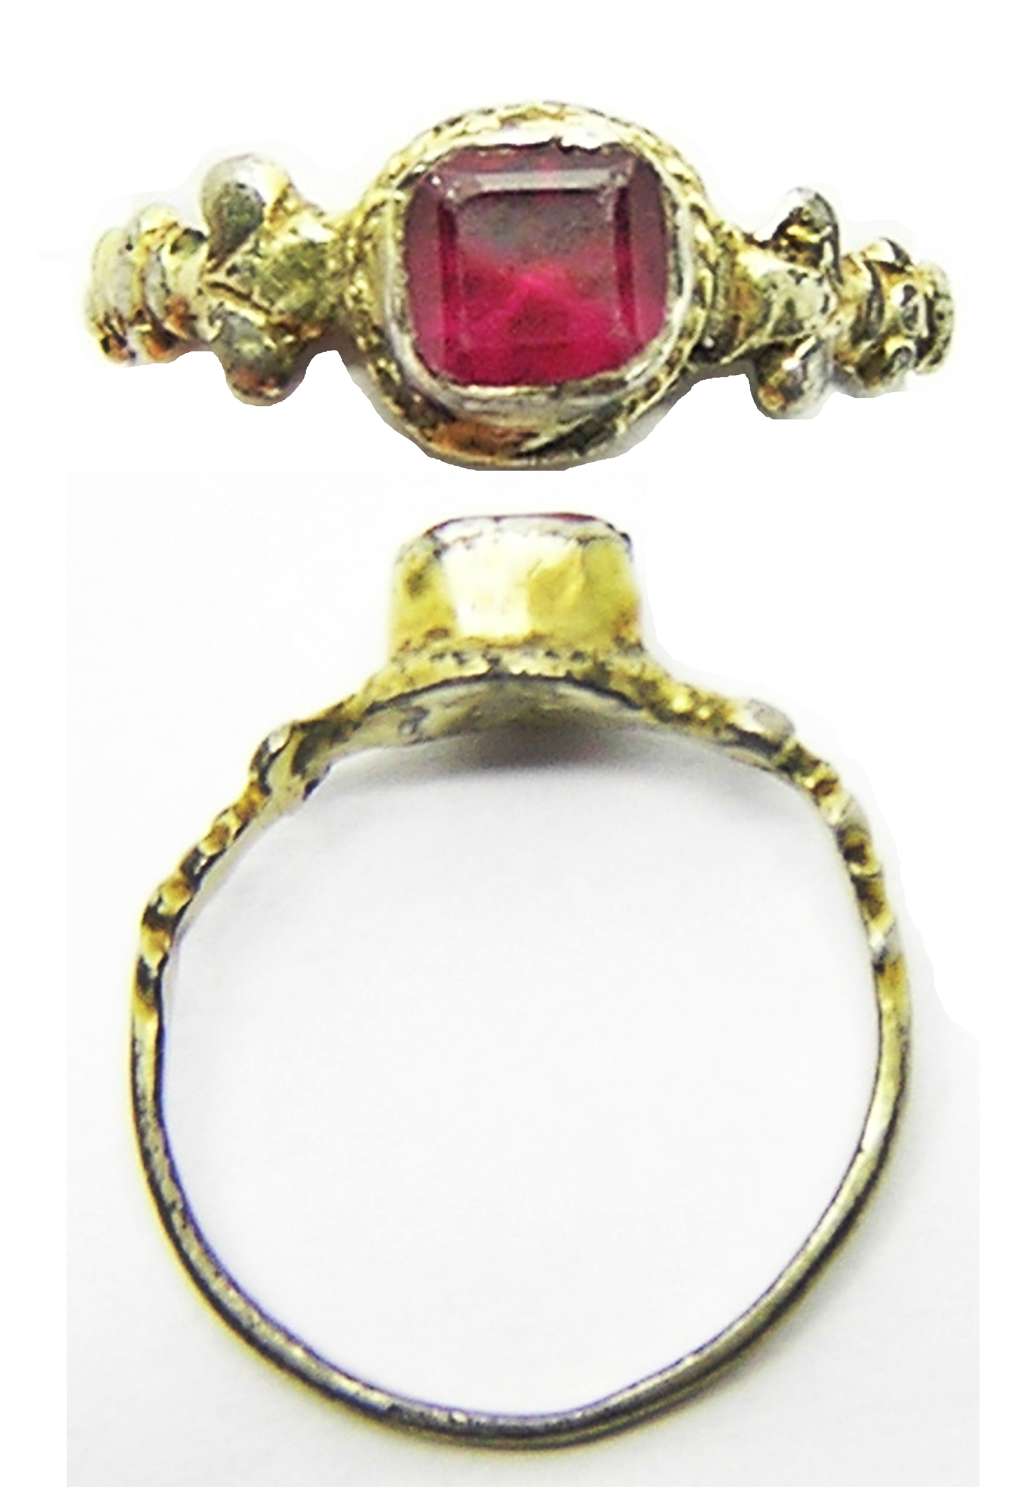 Tudor / Renaissance silver-gilt table-cut ruby paste finger ring